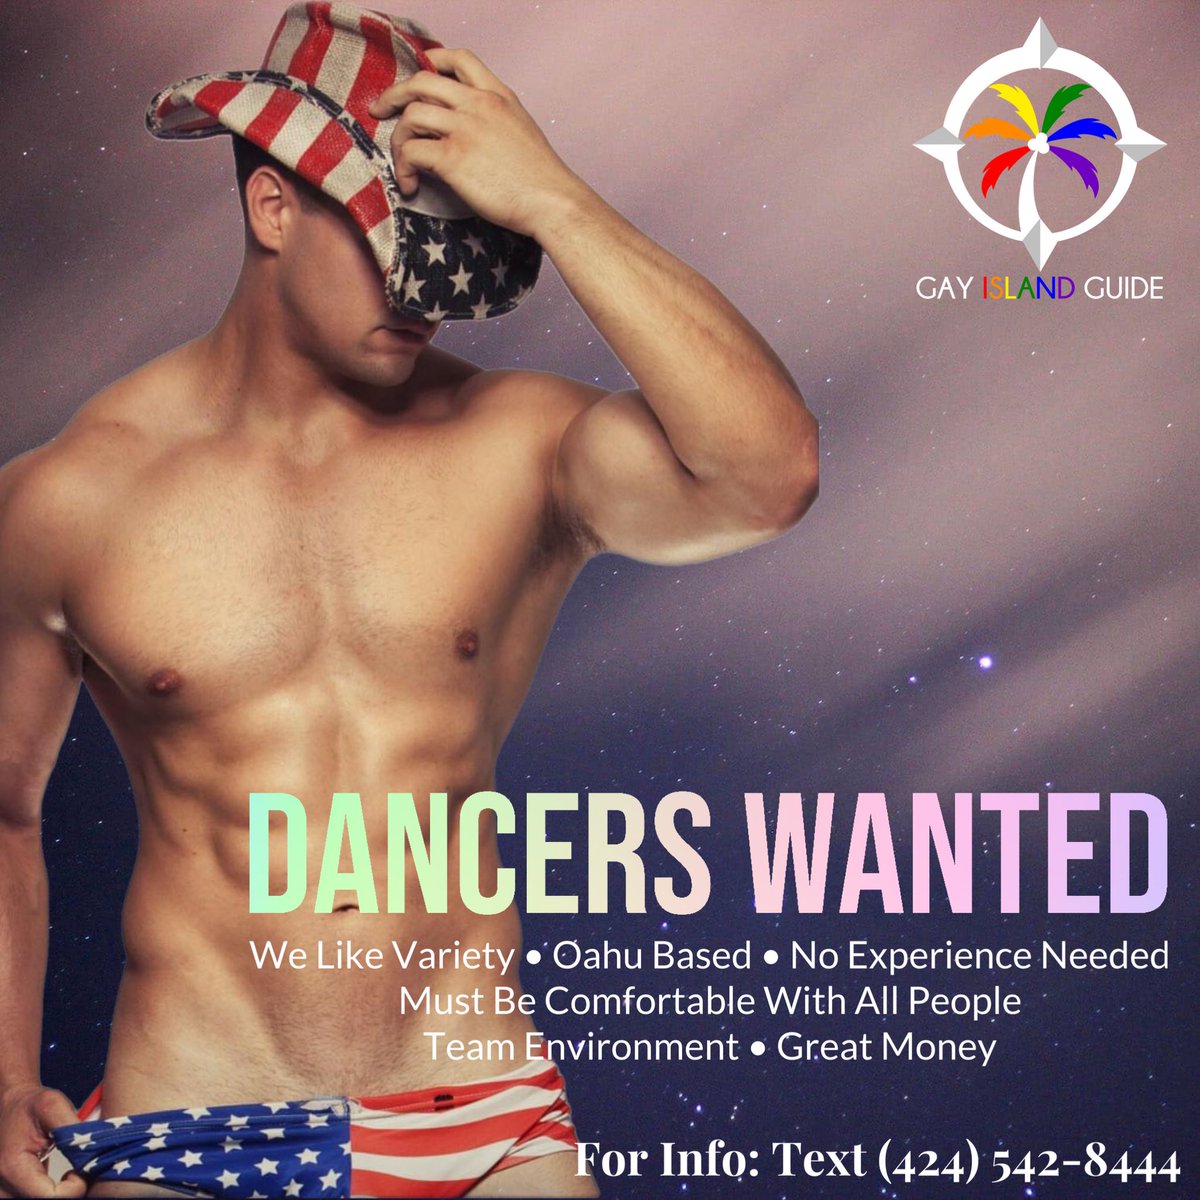 Looking for a Fun Way to Make Some Extra Money? Looking for Male Dancers Based on Oahu for Gogo and Male Revue.
#gayislandguide #gayislandguideevents #maledancer #oahu #honolulu #waikiki #hawaii #gayhawaii #lgbthawaii #gayoahu #gayhonolulu #gaywaikiki #hunk #malerevue #gogodancer